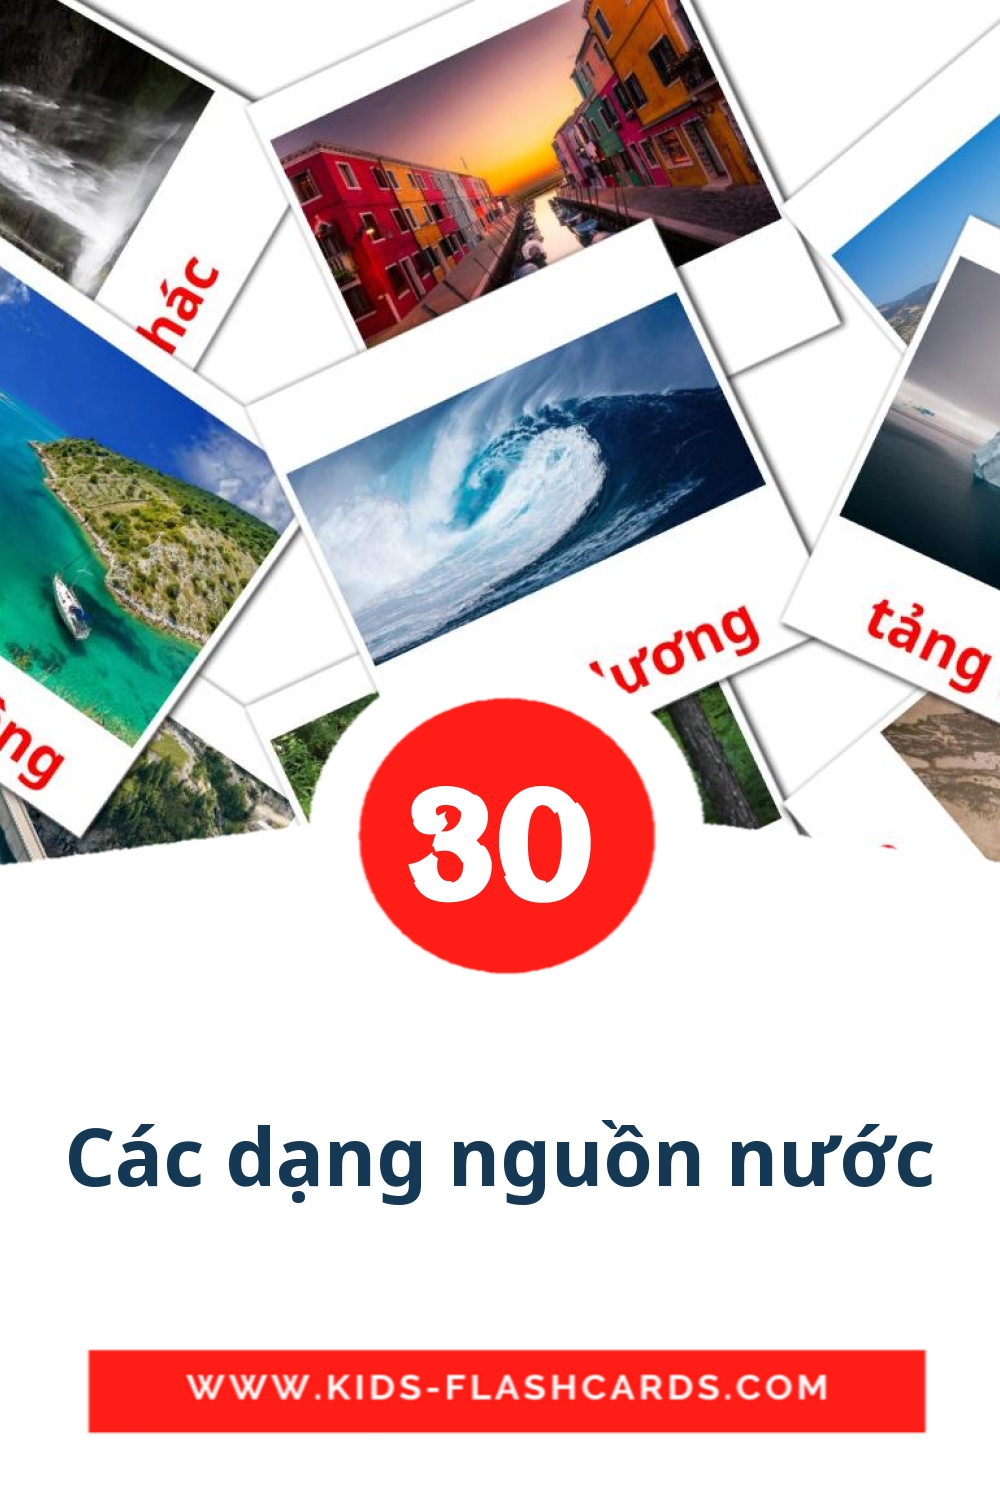 30 tarjetas didacticas de Các dạng nguồn nước para el jardín de infancia en vietnamita